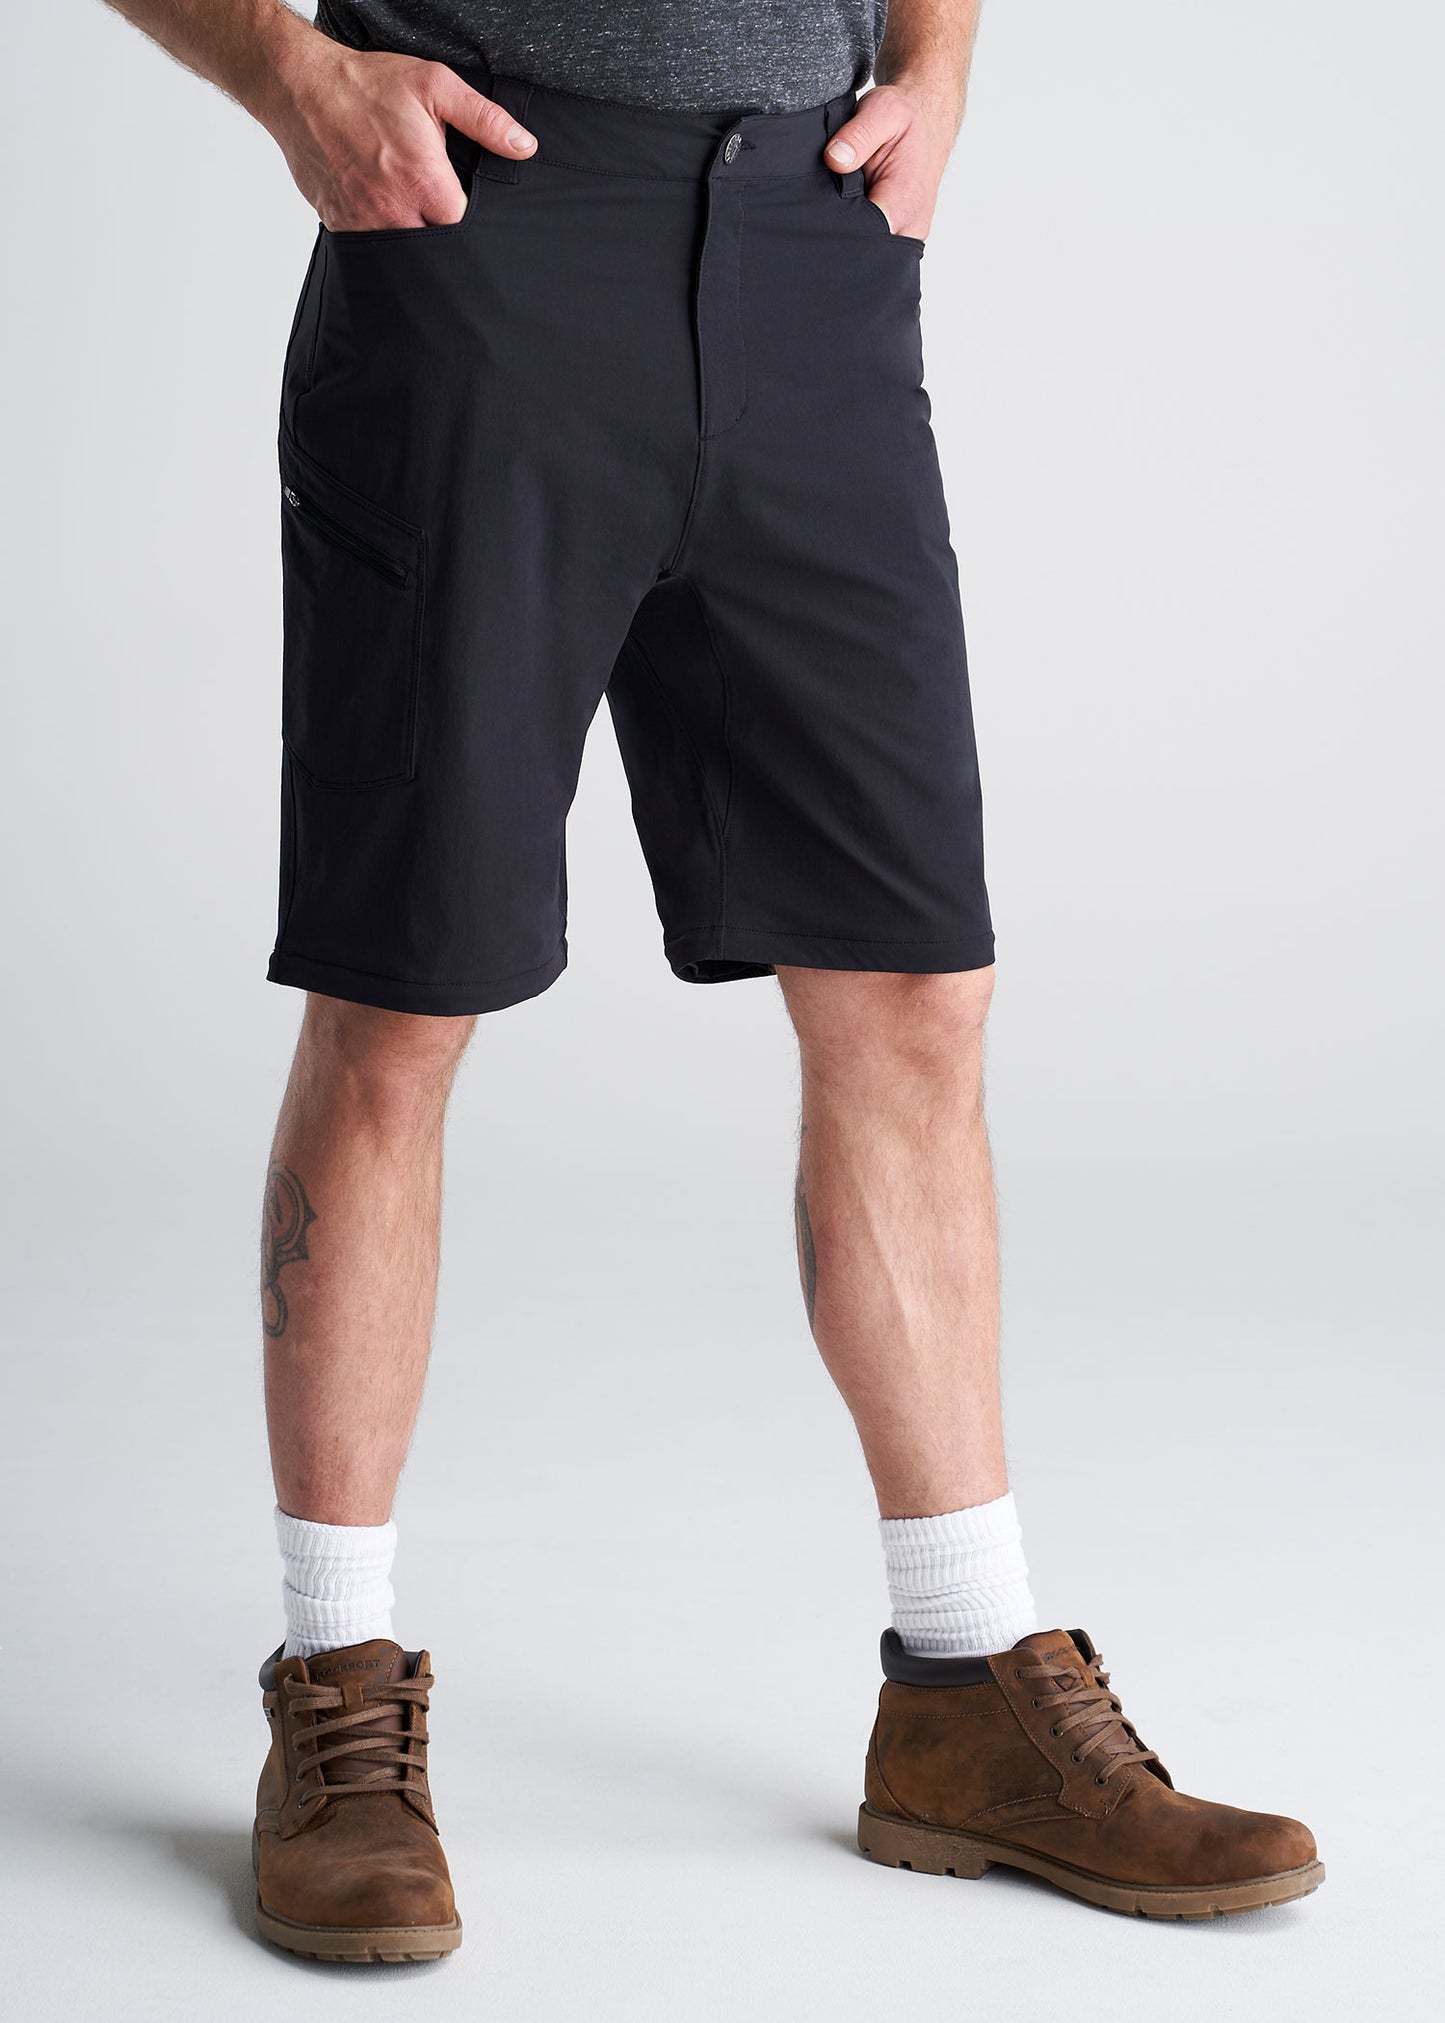 American_Tall_Mens_Hiking_Zipoff_Pant_Black-shorts